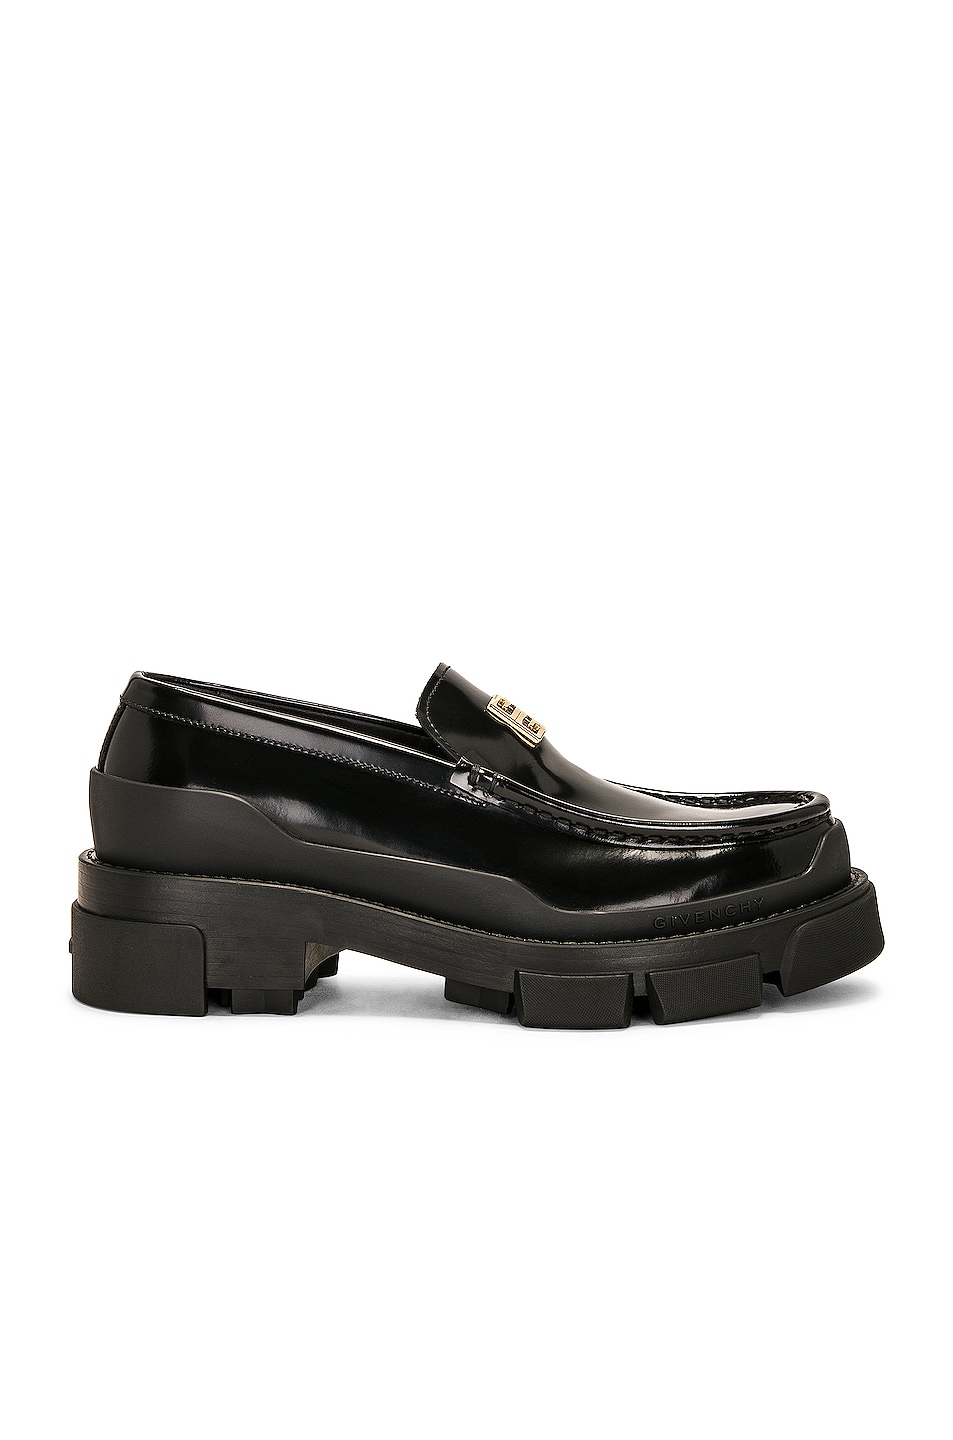 Givenchy Terra Loafer in Black | FWRD